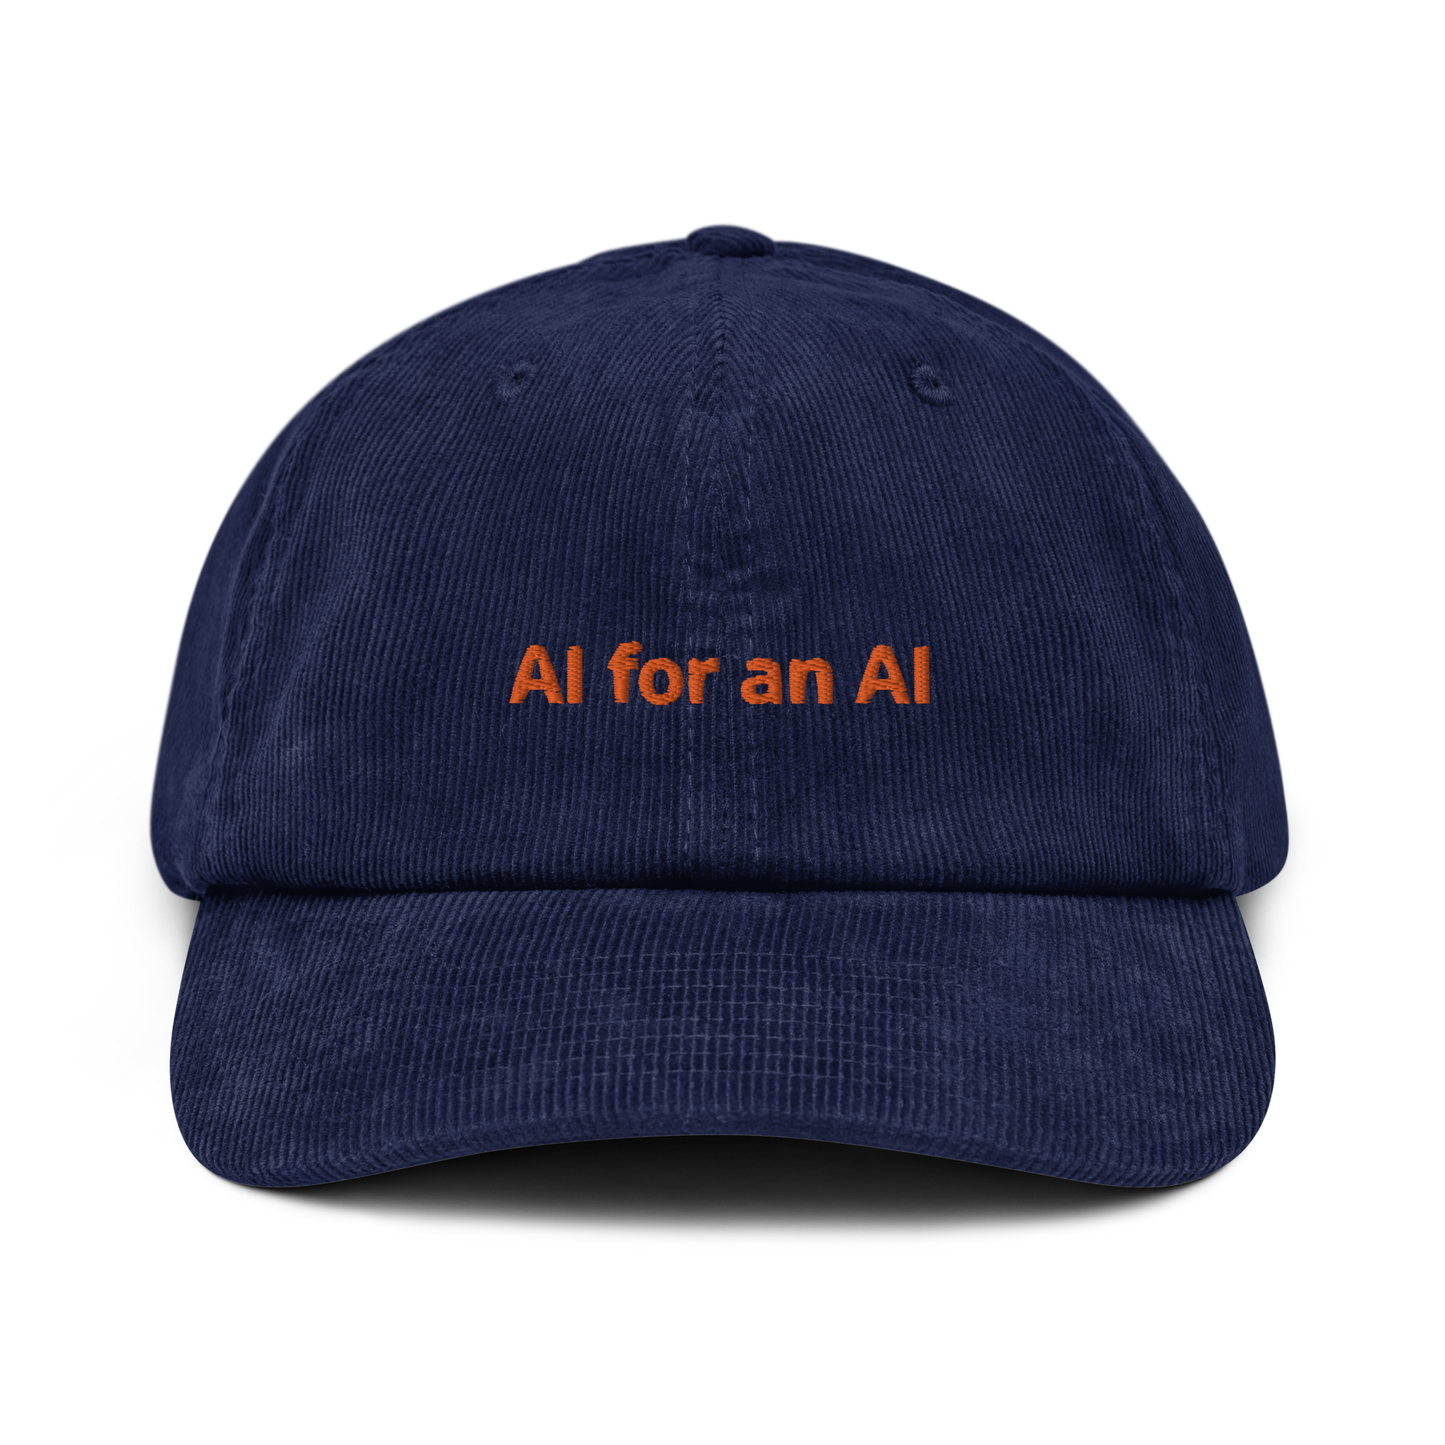 AI for an AI - Corduroy hat